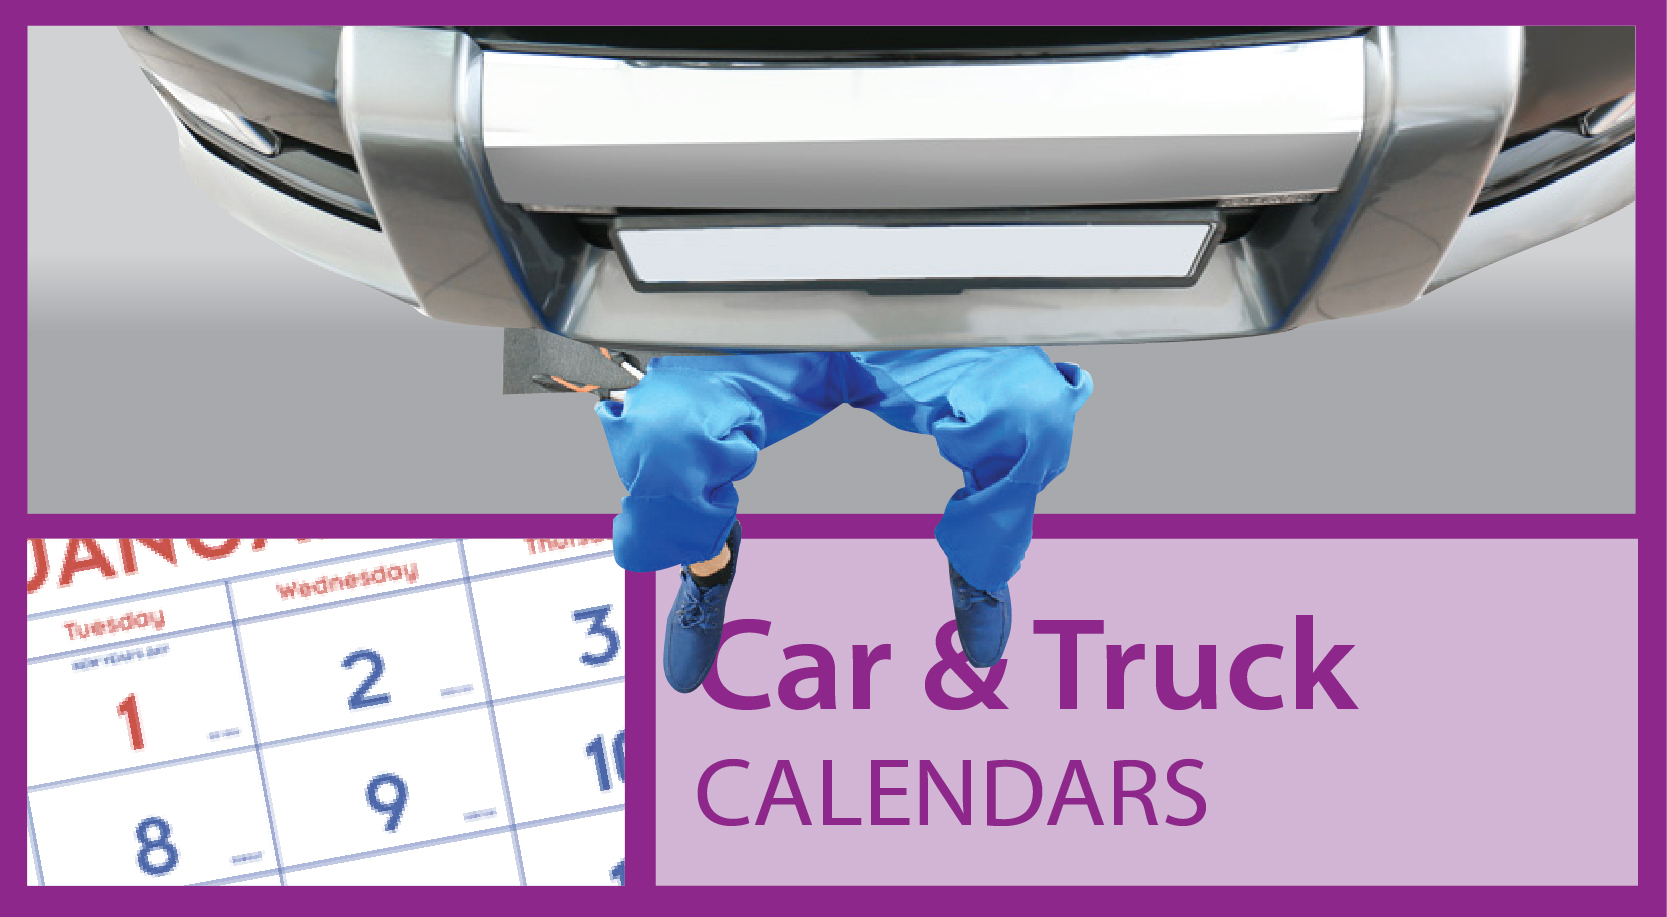 Promotional Car & Truck Calendars